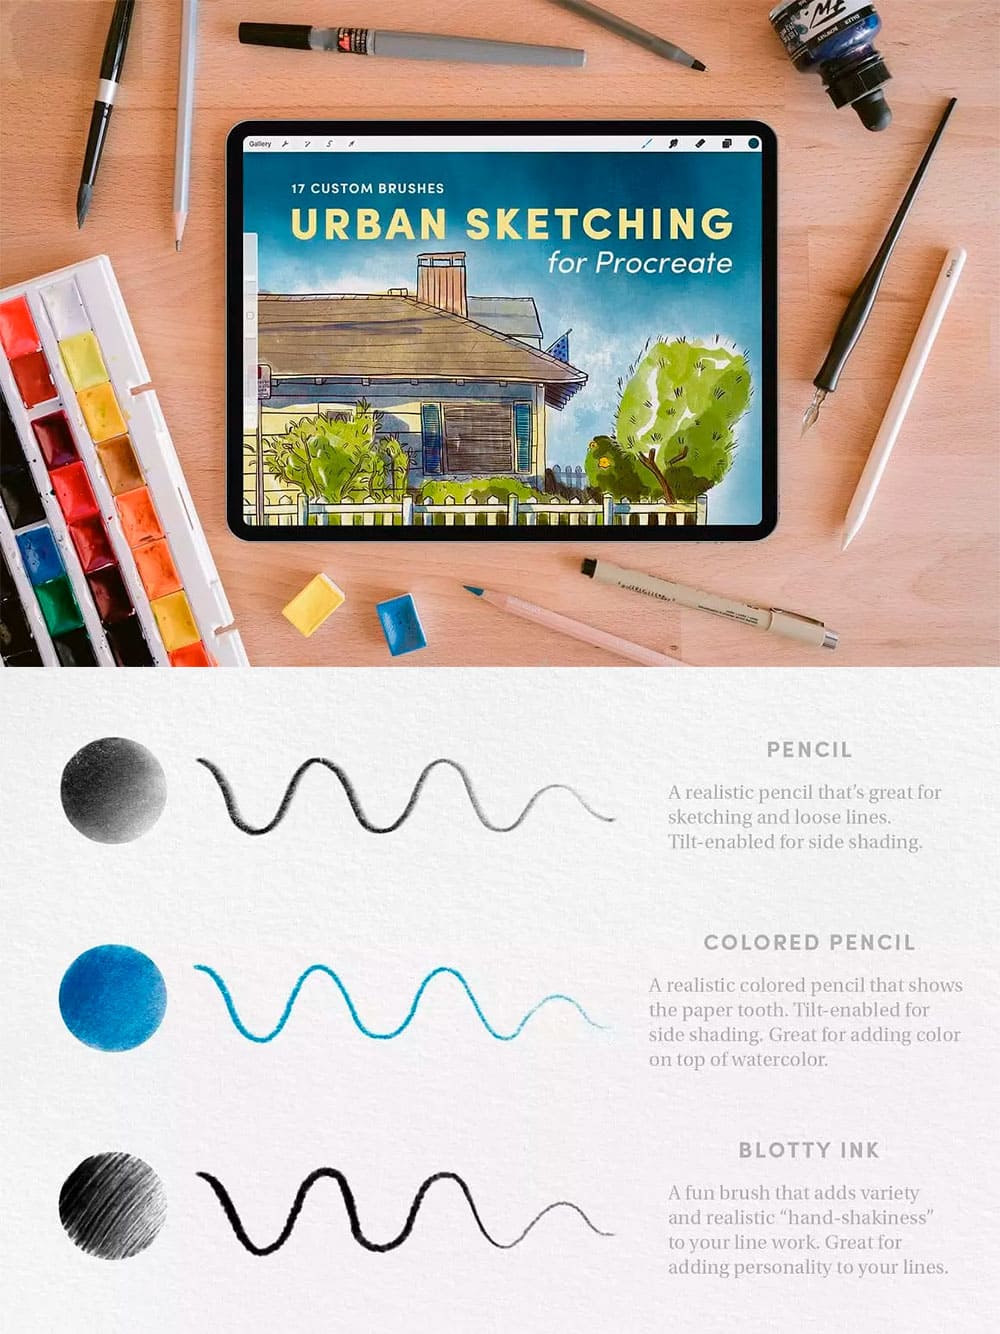 Urban sketching procreate brushes, image for pinterest.